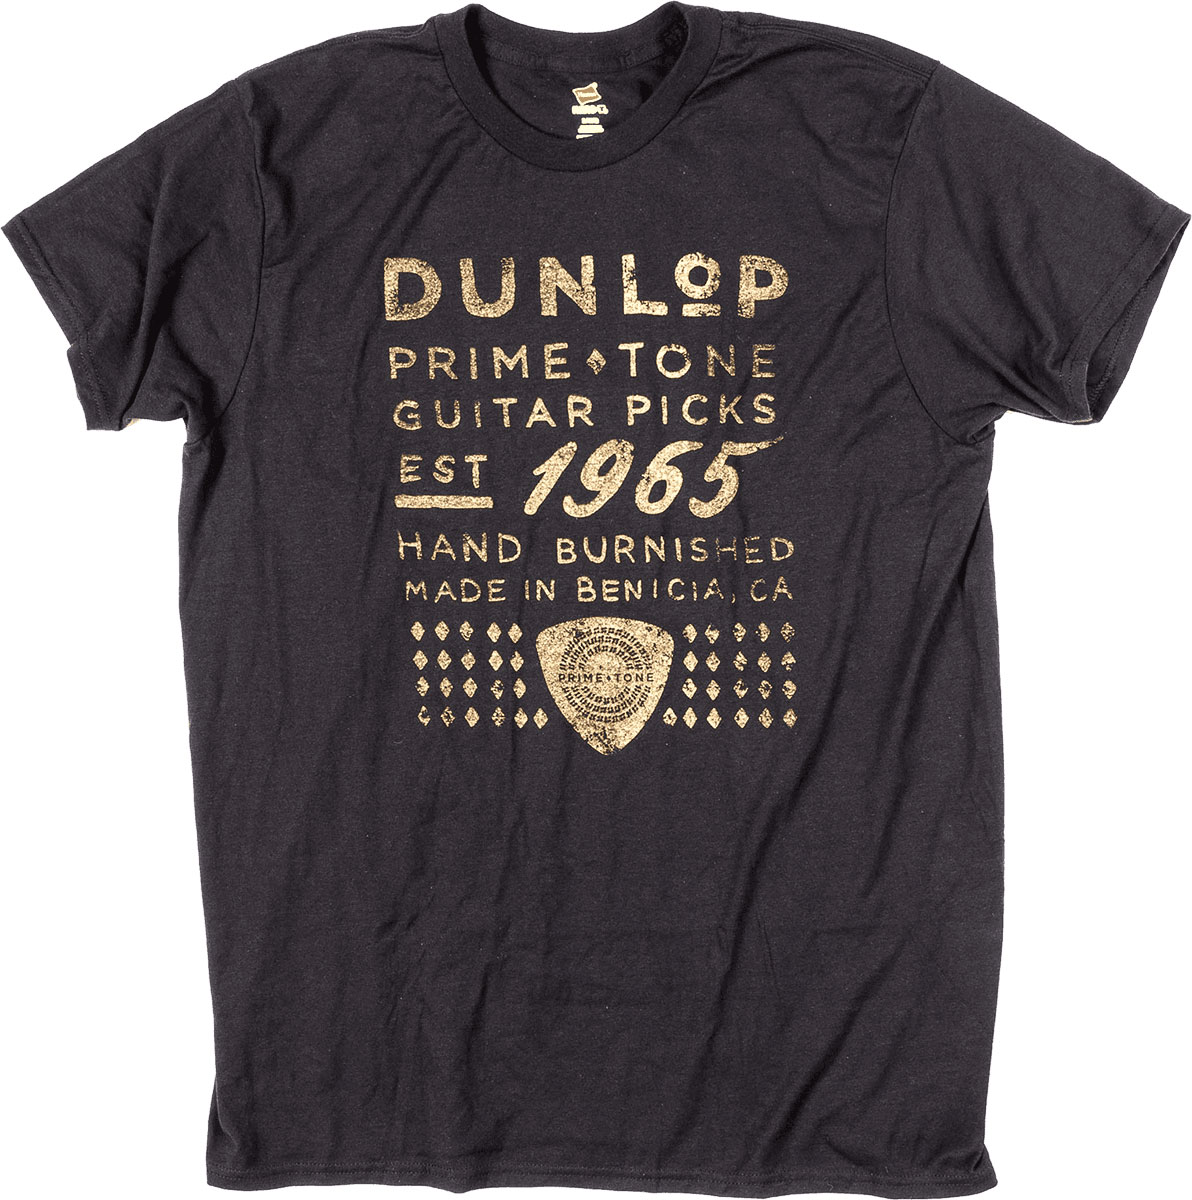 Dunlop T-shirt Primetone 1965 Medium